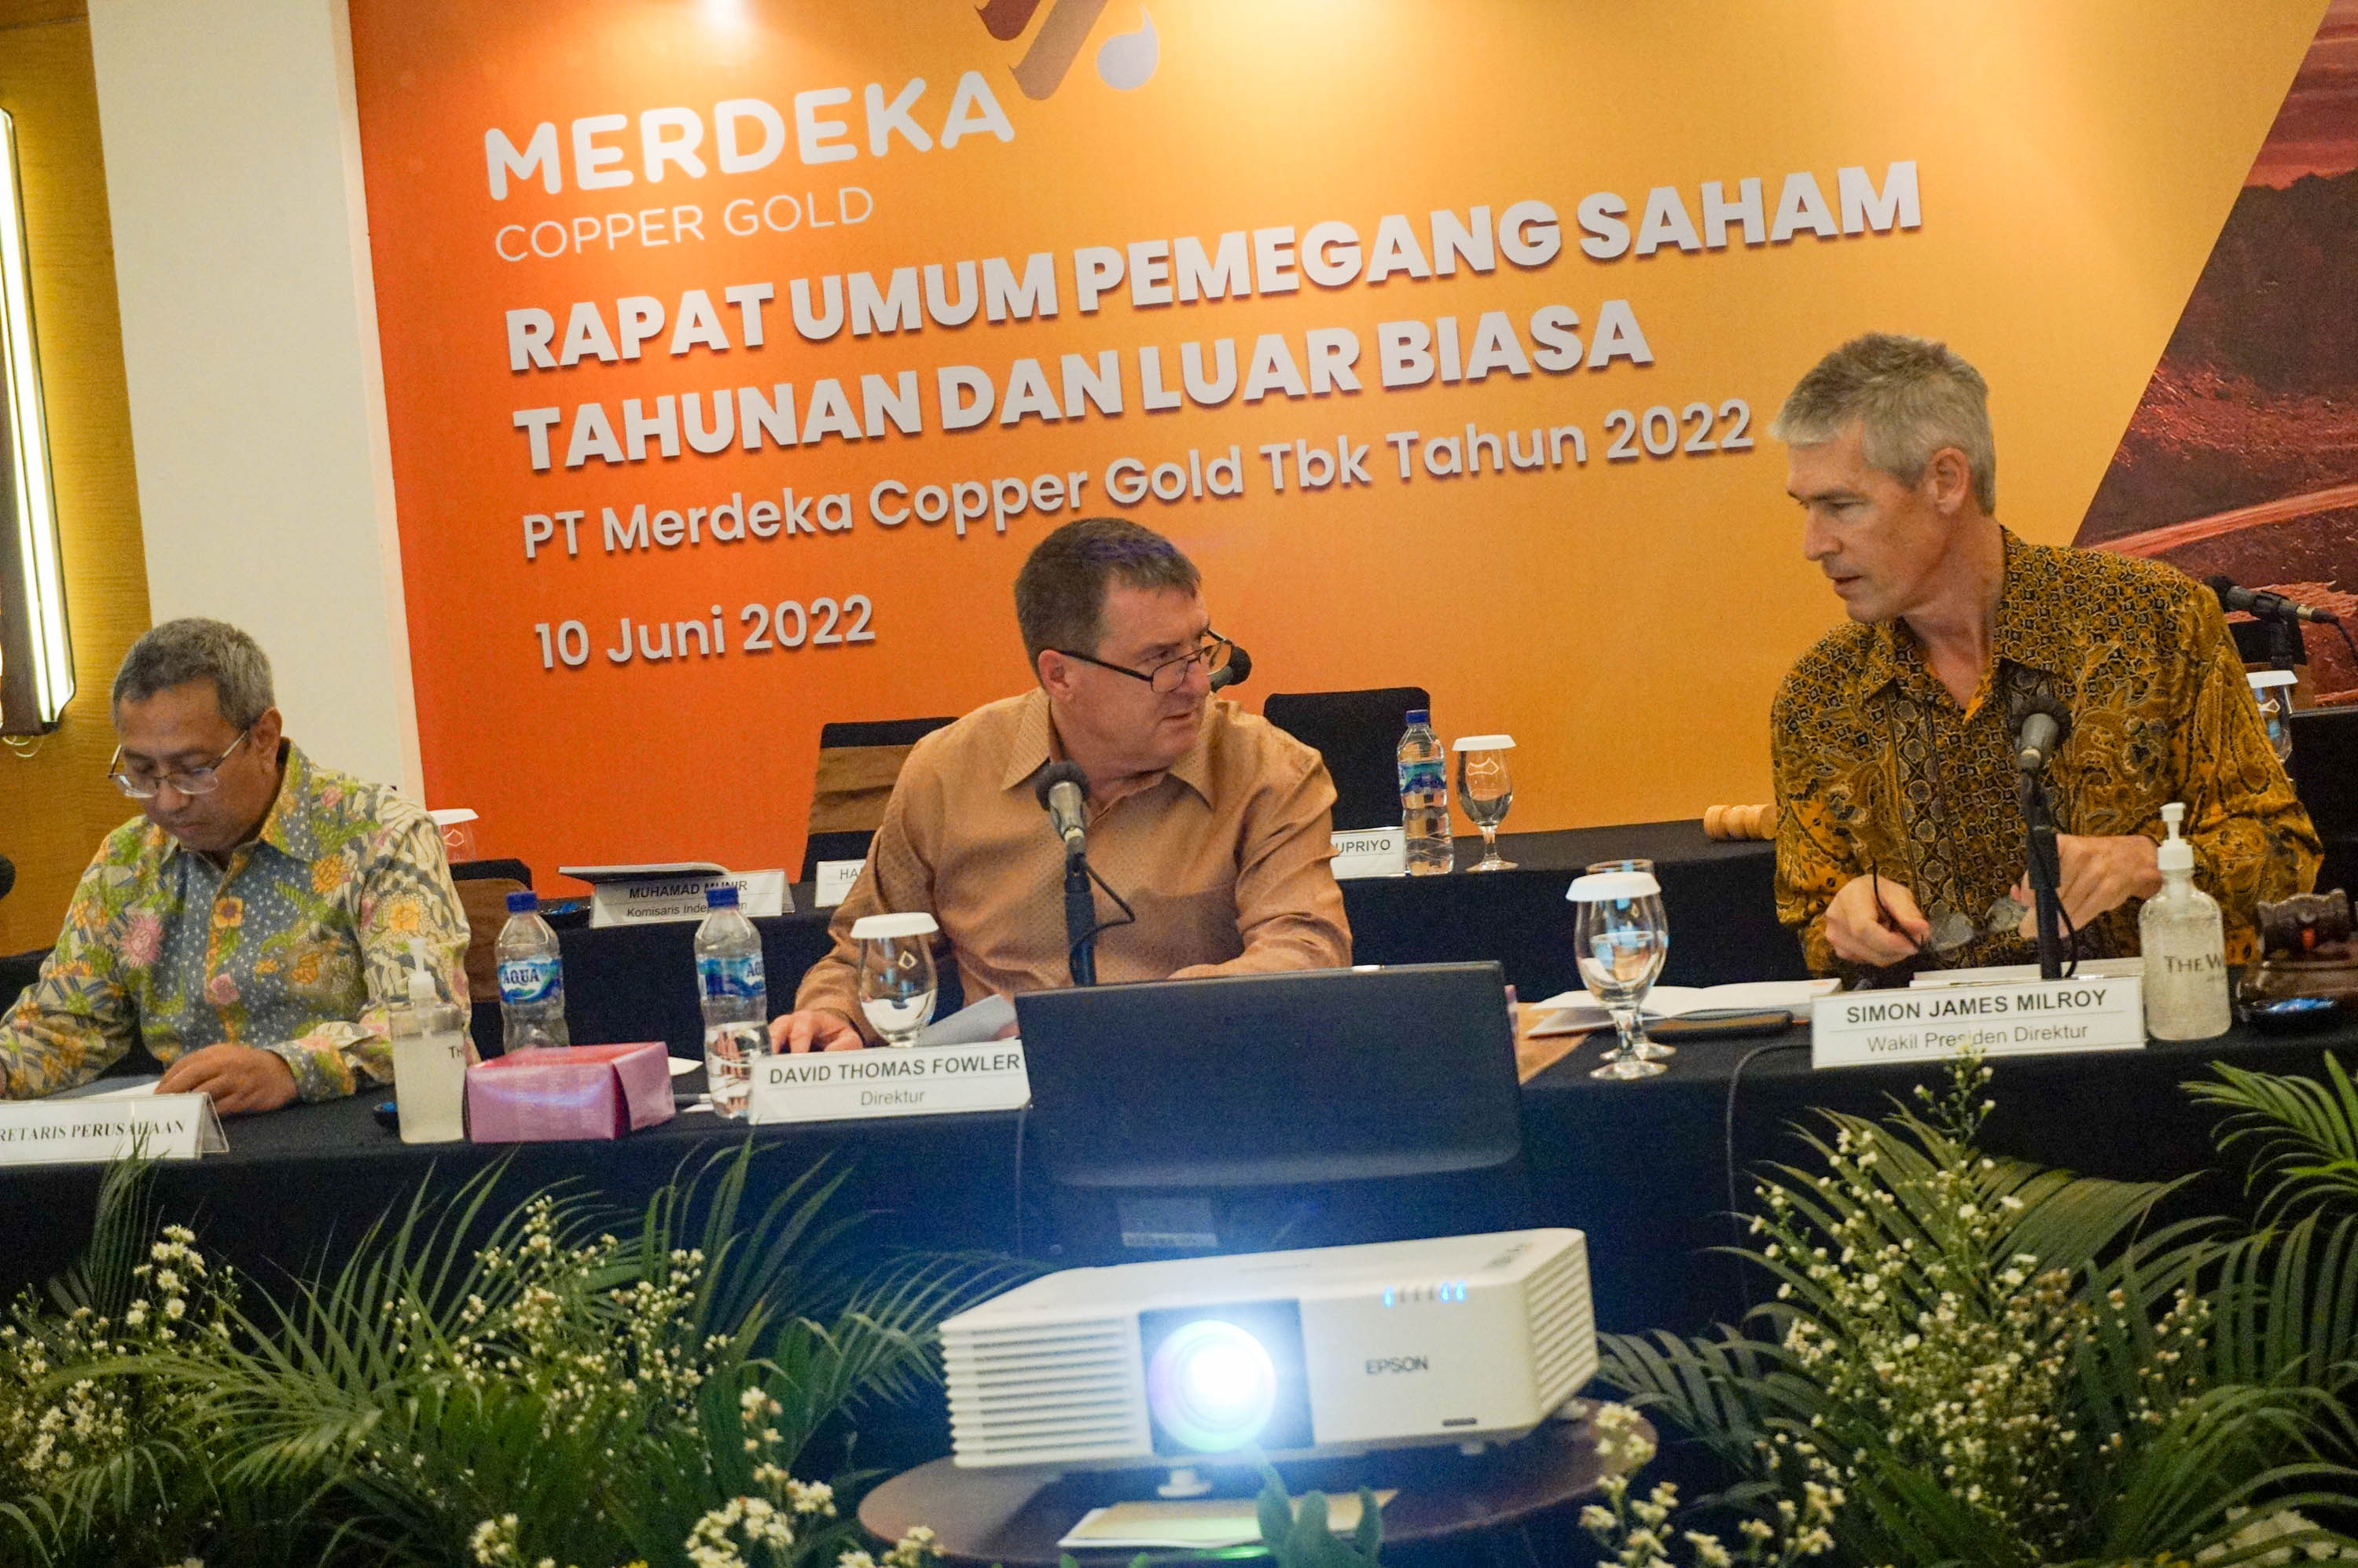 Direktur MDKA David Thomas Fowler (tengah),  Wakil Presiden Direktur MDKA Simon James Milroy (kanan) menyampaikan pemaparan pada public exphose usai Rapat Umum Pemegang Saham  di Jakarta, Jumat, 10 Juni 2022. Foto: Ismail Pohan/TrenAsia